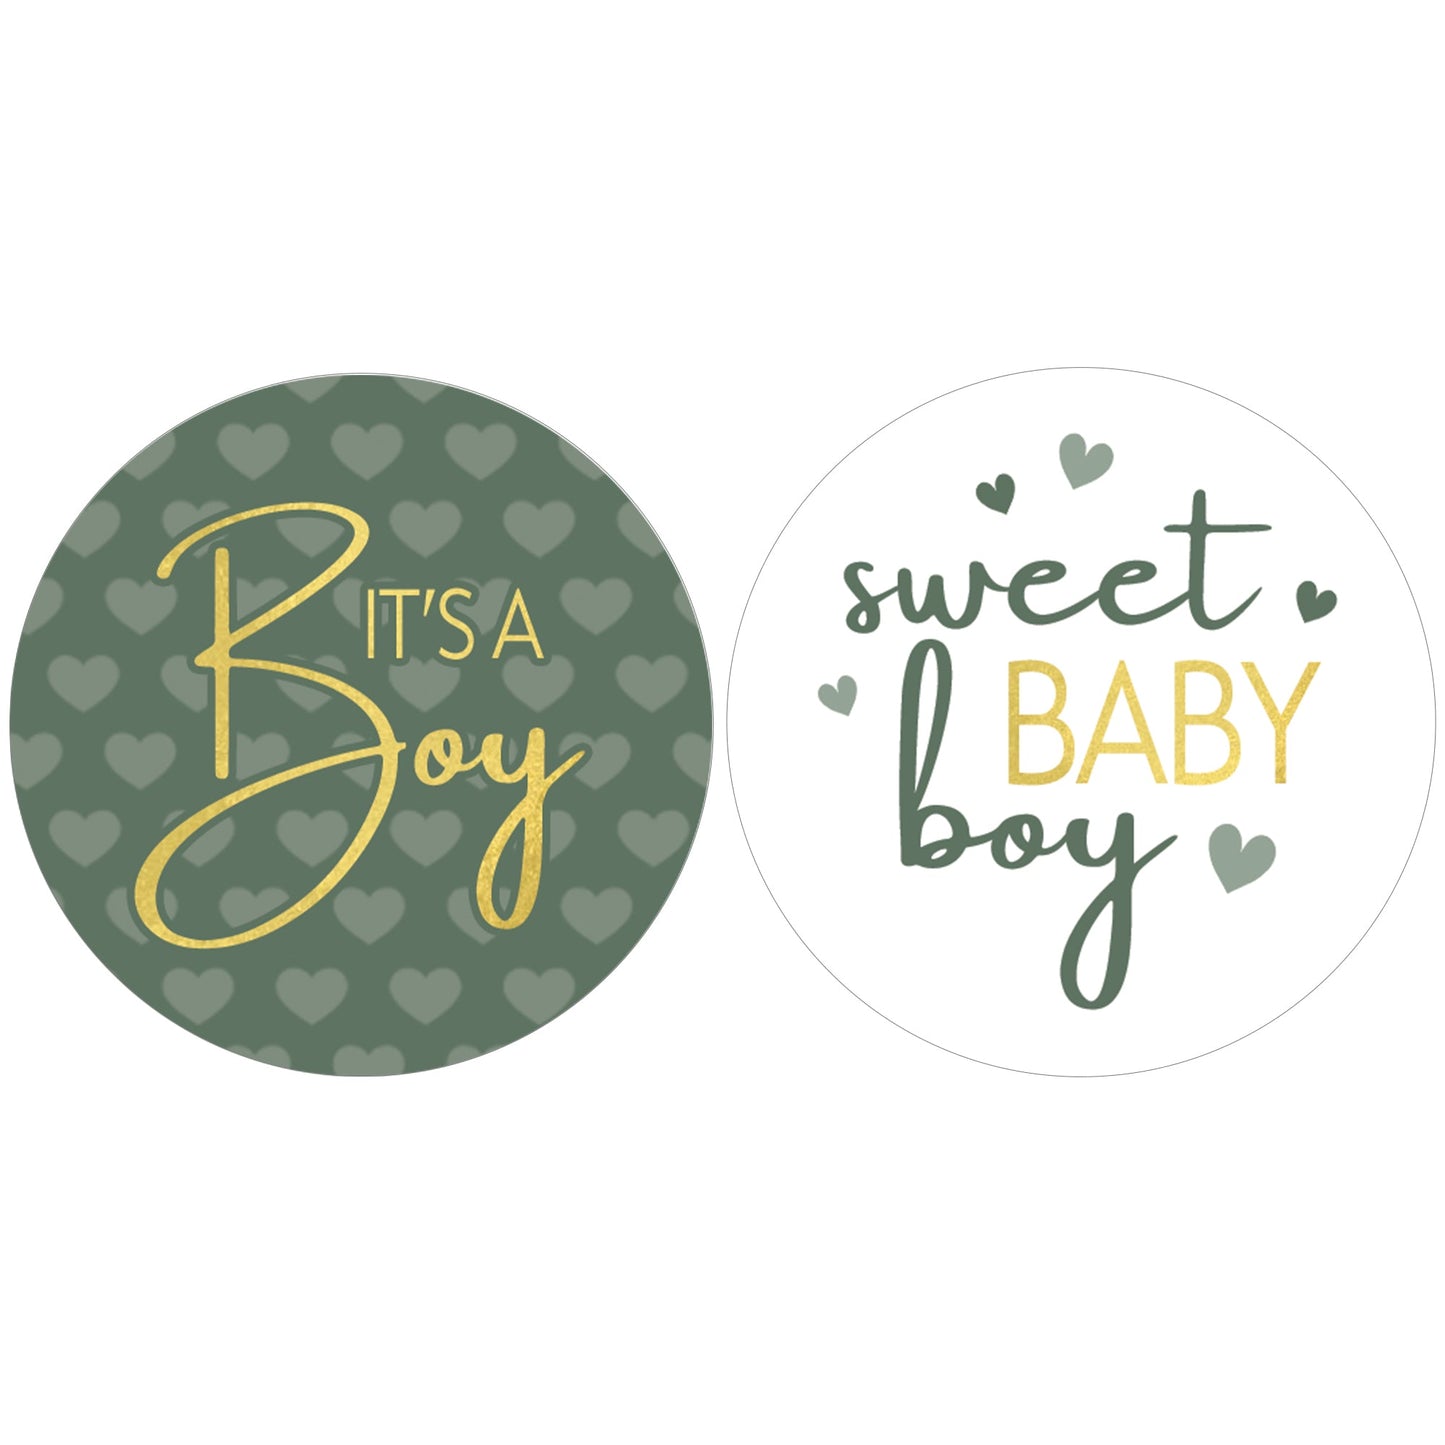 Sweet Baby Boy: Green - It’s a Boy Baby Shower Stickers  - 40 Stickers